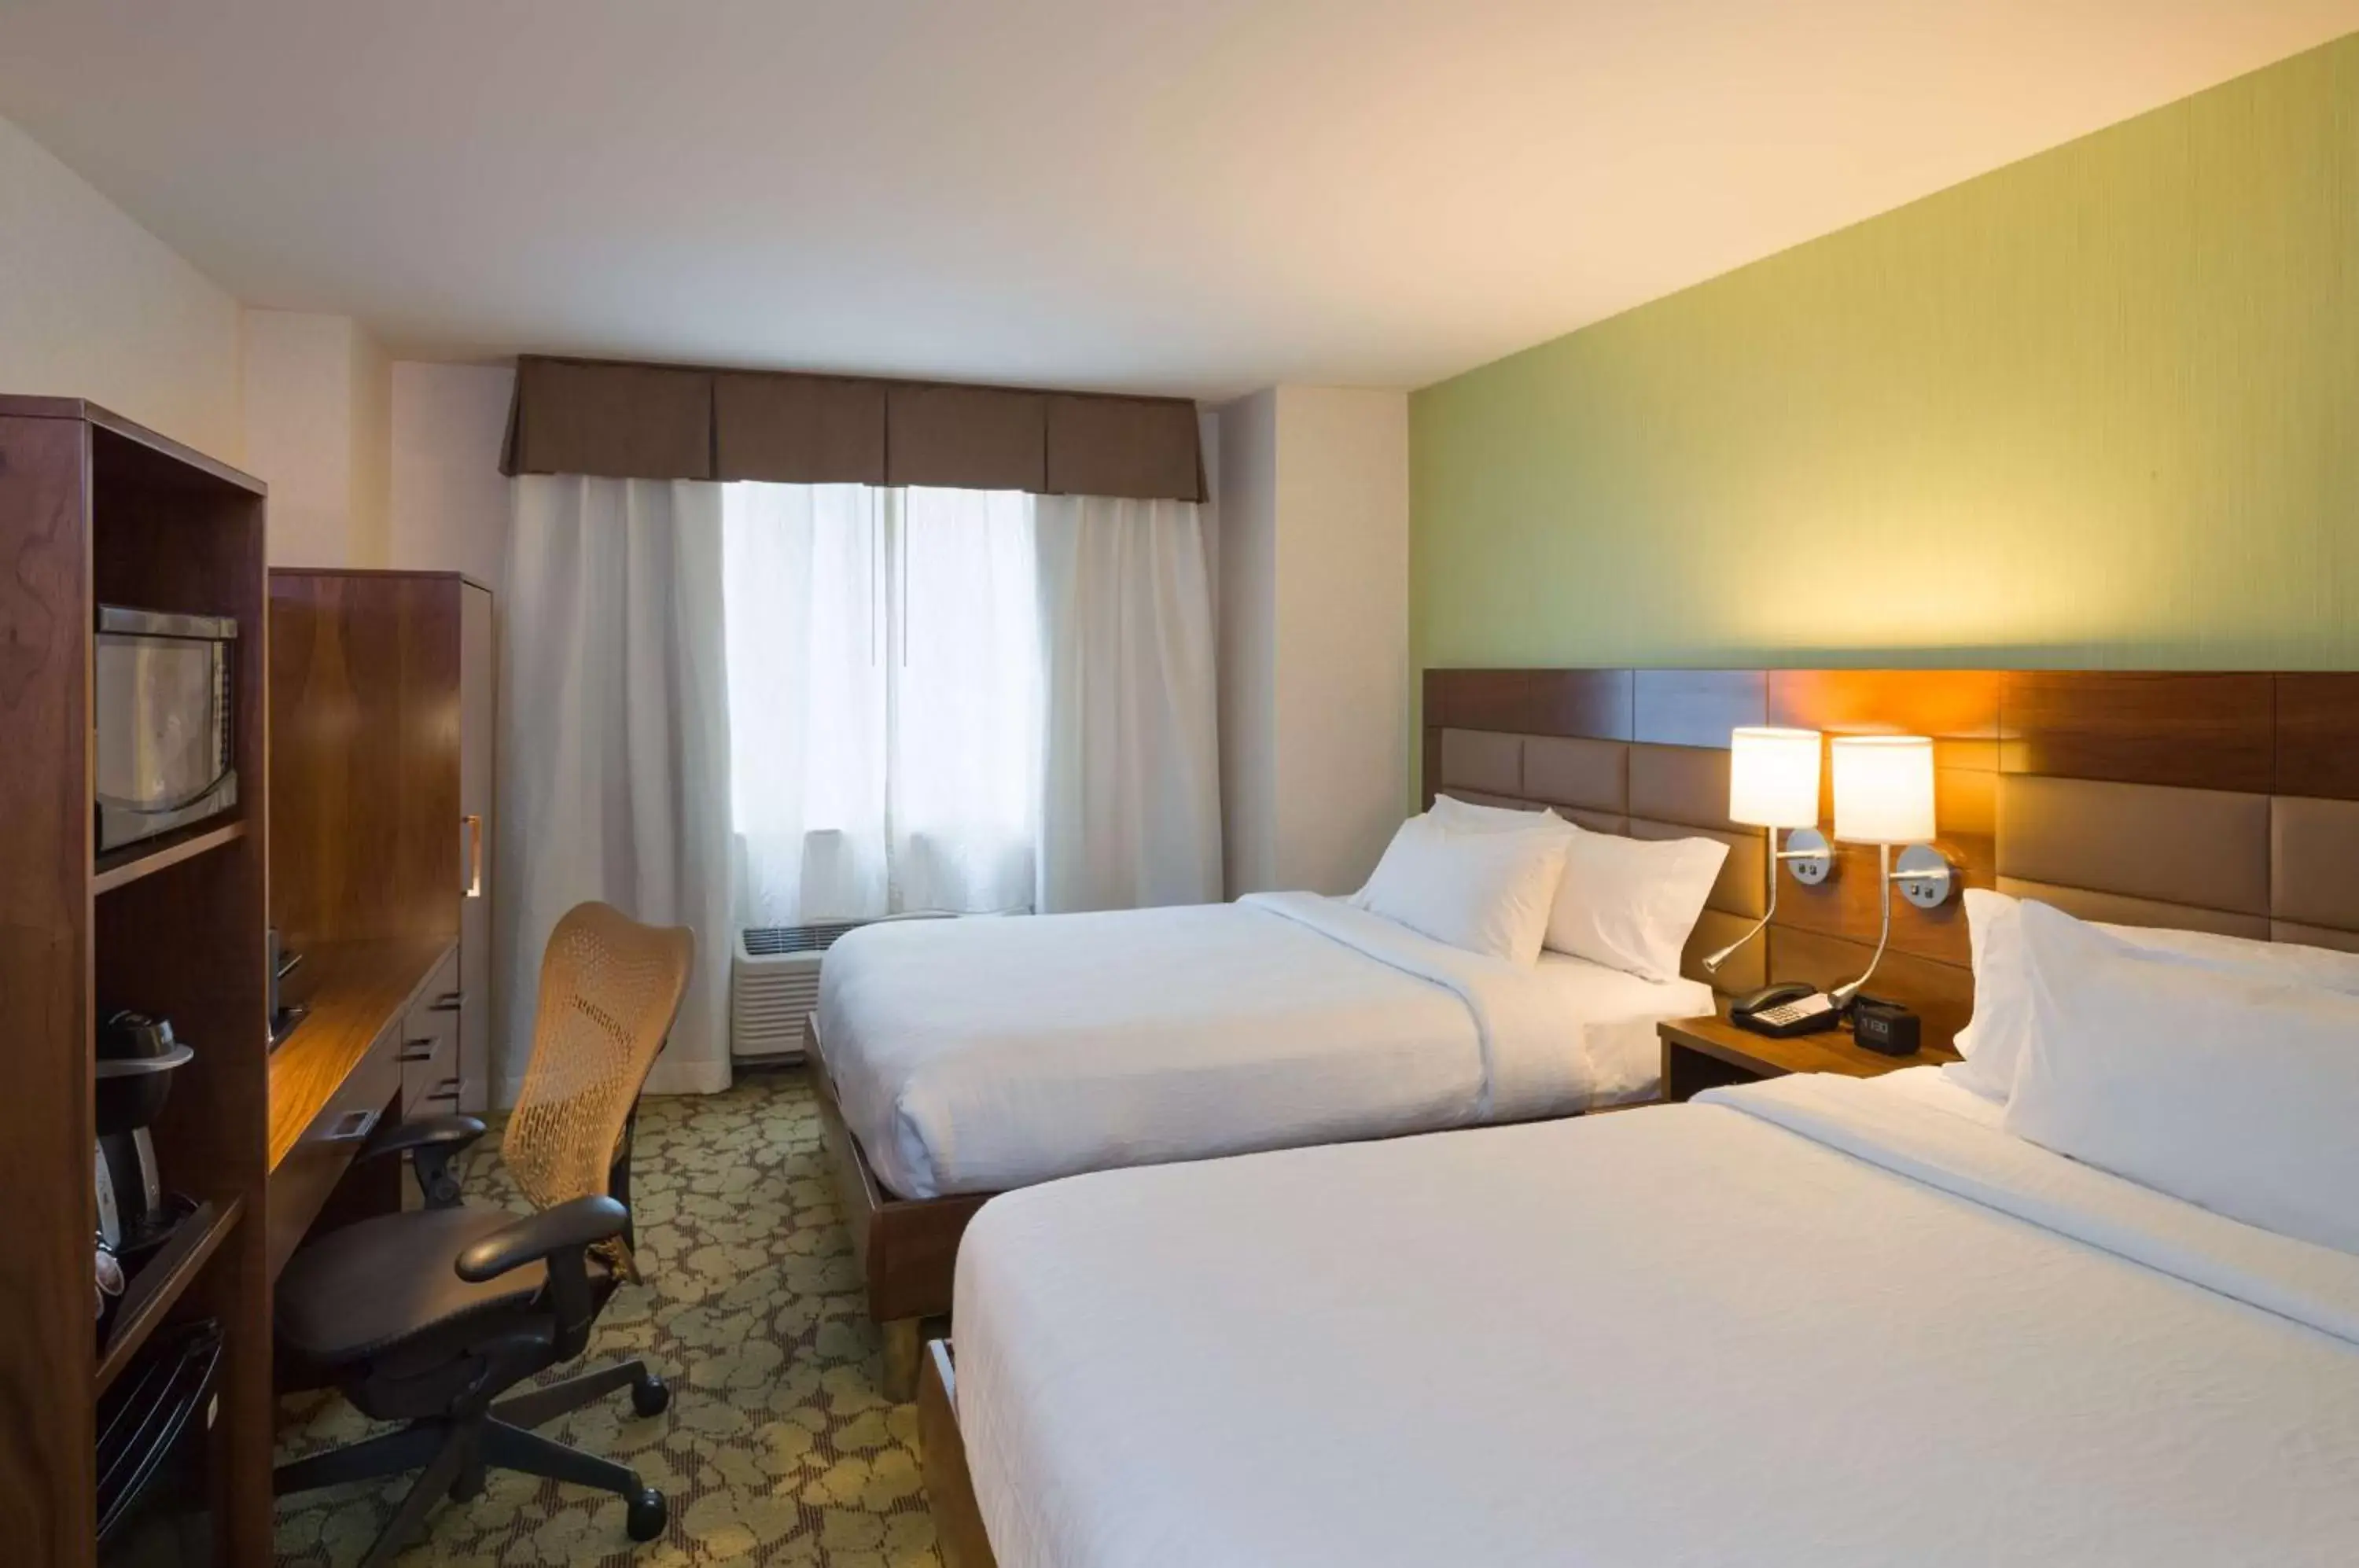 Premium Queen Room with Two Queen Beds - Non-Smoking in Hilton Garden Inn New York Manhattan Midtown East